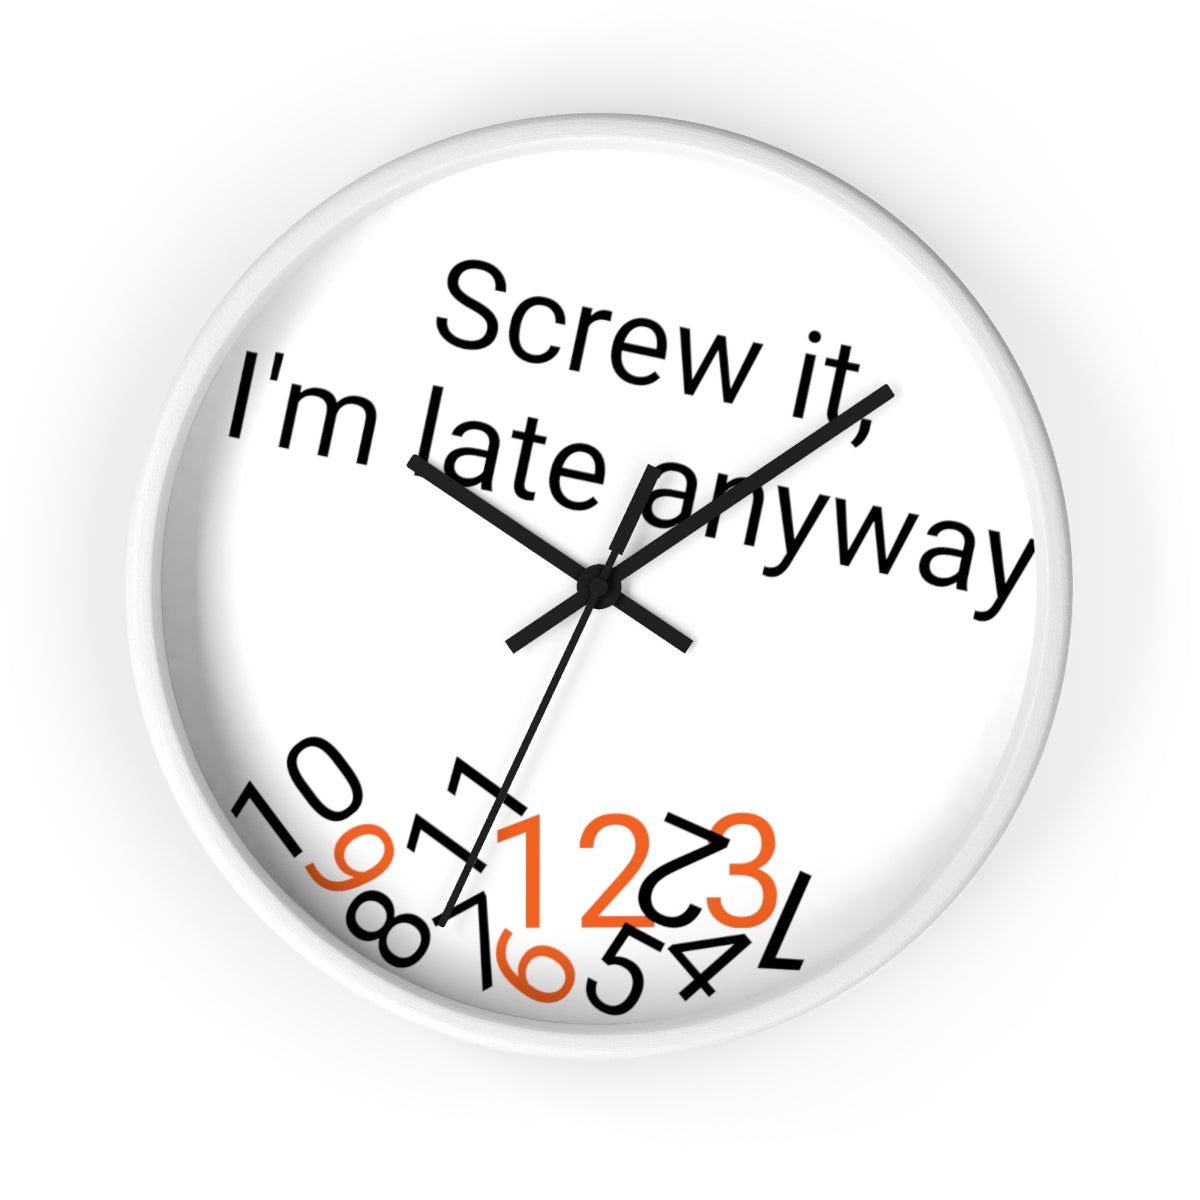 Screw it, I'm late Anyway - Wall clock